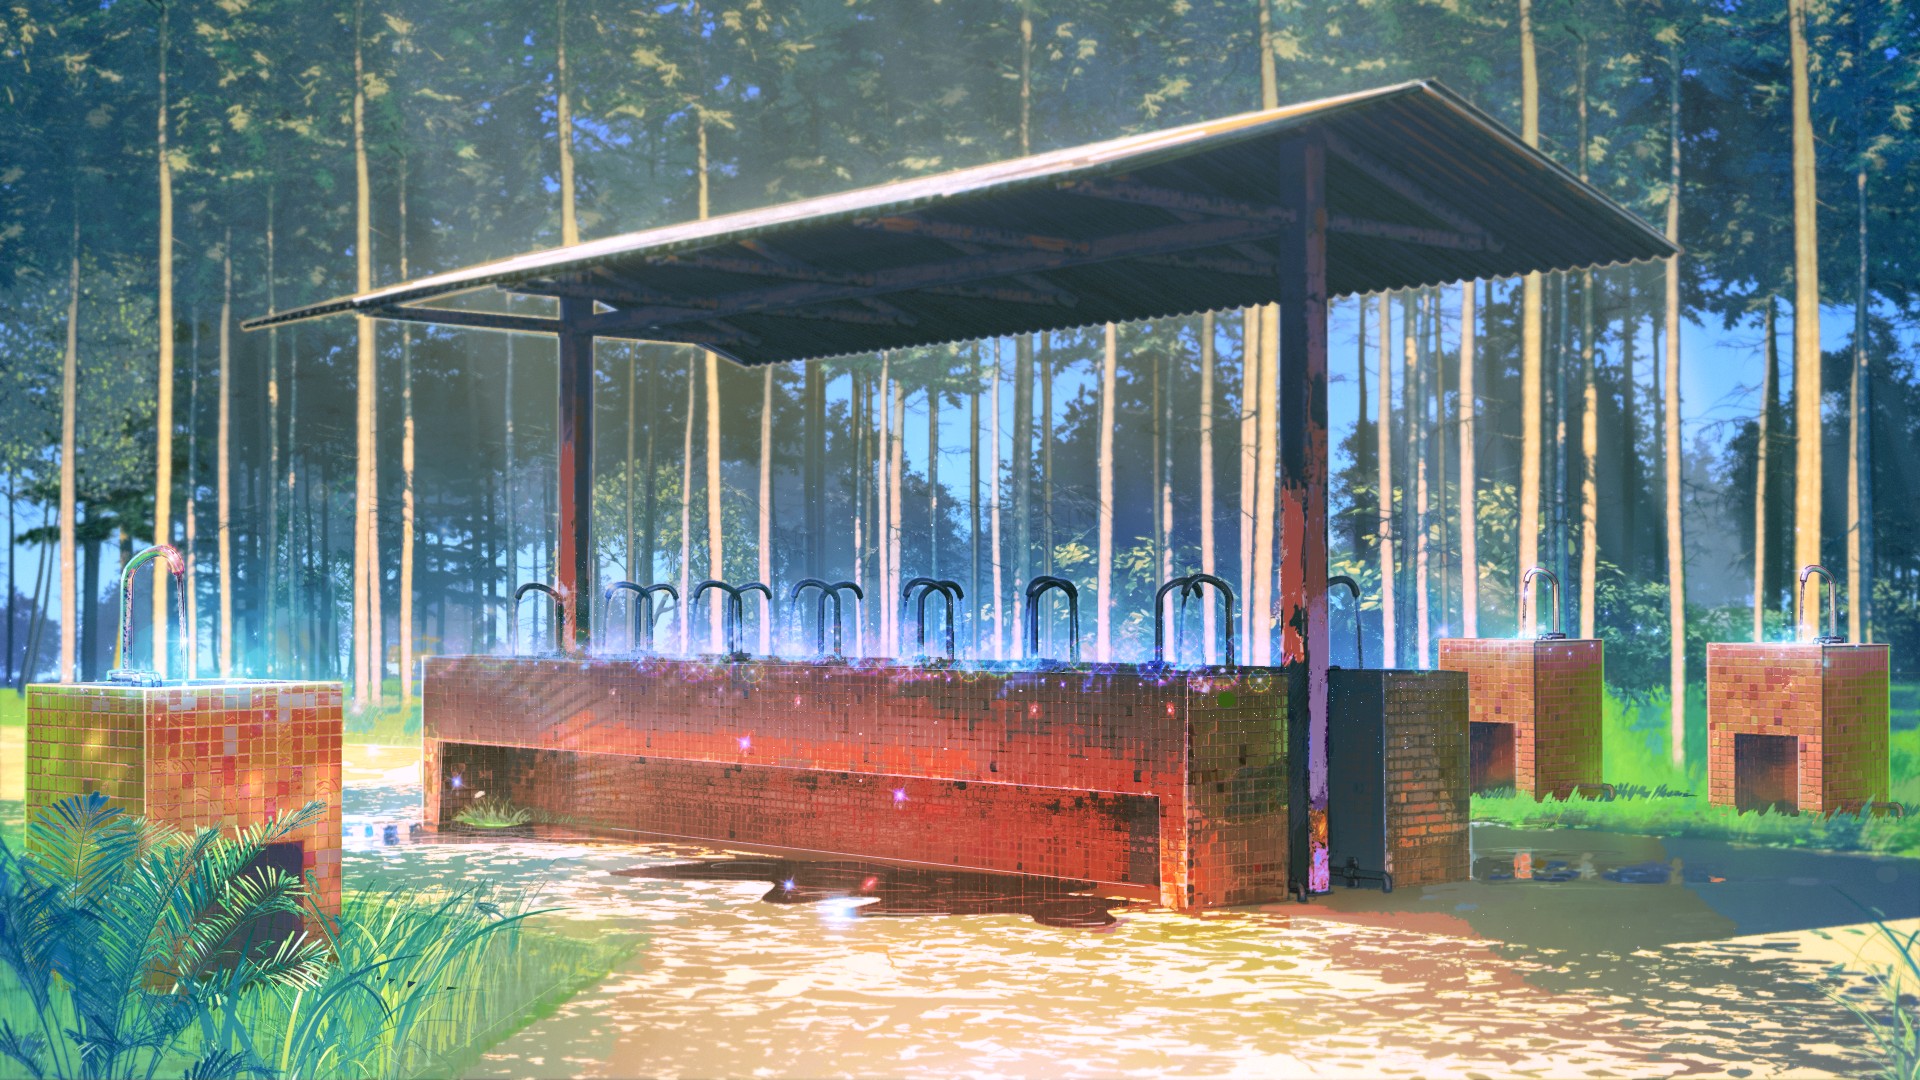 trees, Tiles, Drinking fountains, Water, Everlasting Summer, Visual novel Wallpaper